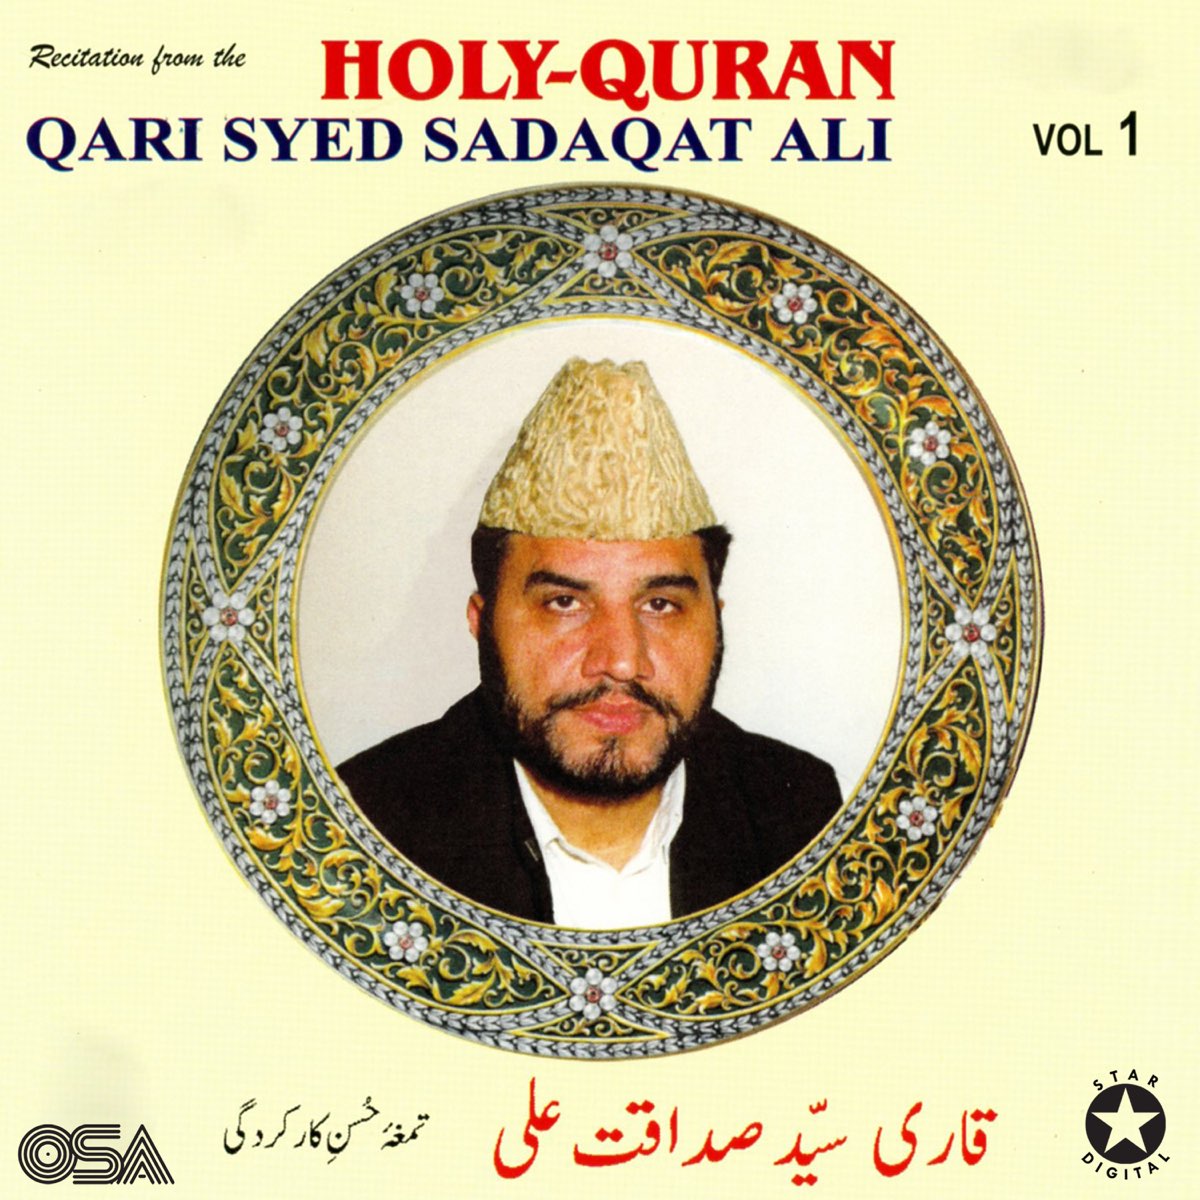 Recitation from the Holy Quran, Vol. 1 - Album by Qari Syed Sadaqat Ali -  Apple Music